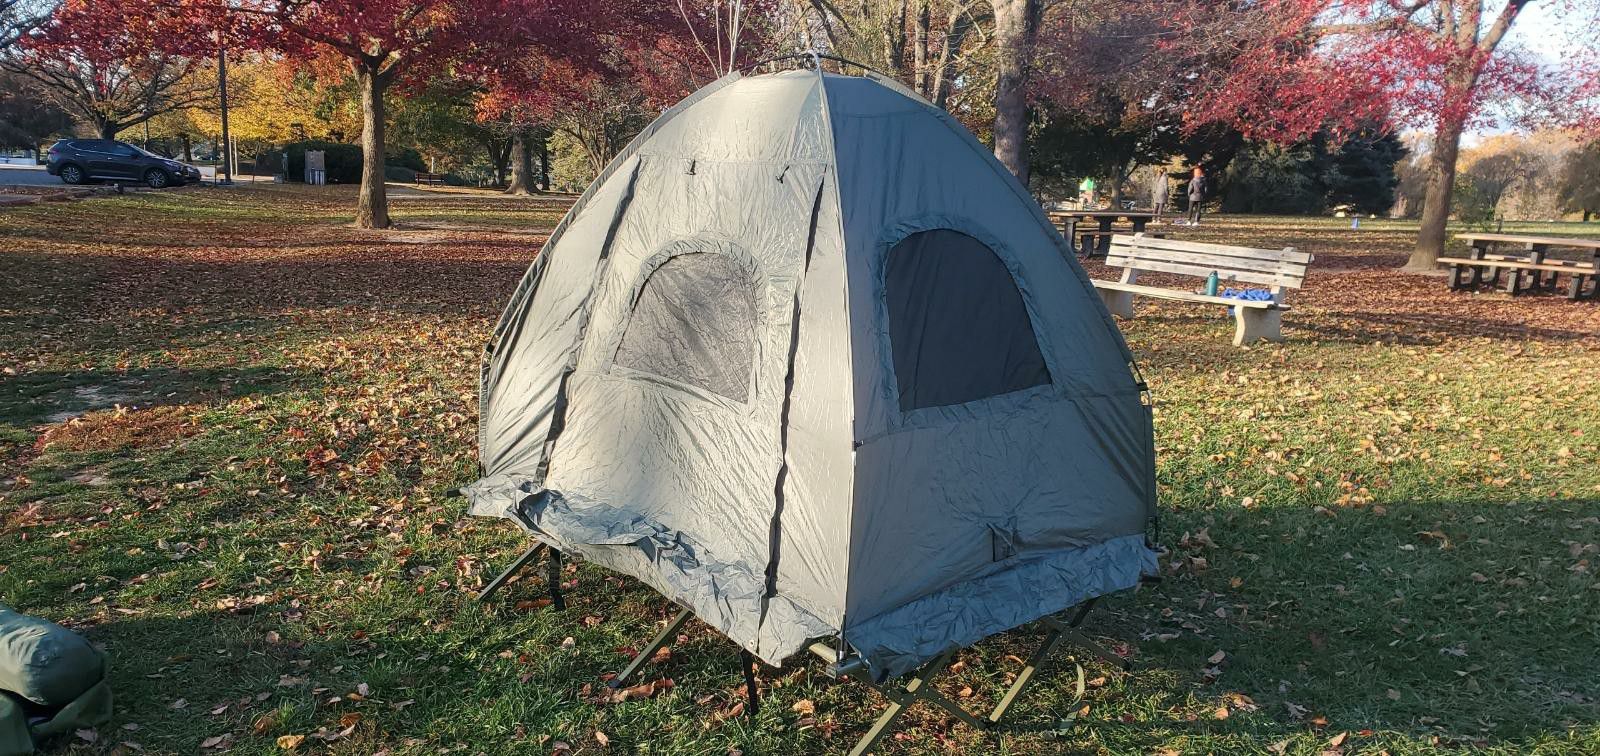 Off Ground Camping Tent Cot Air Mattress  Sleeping Bag